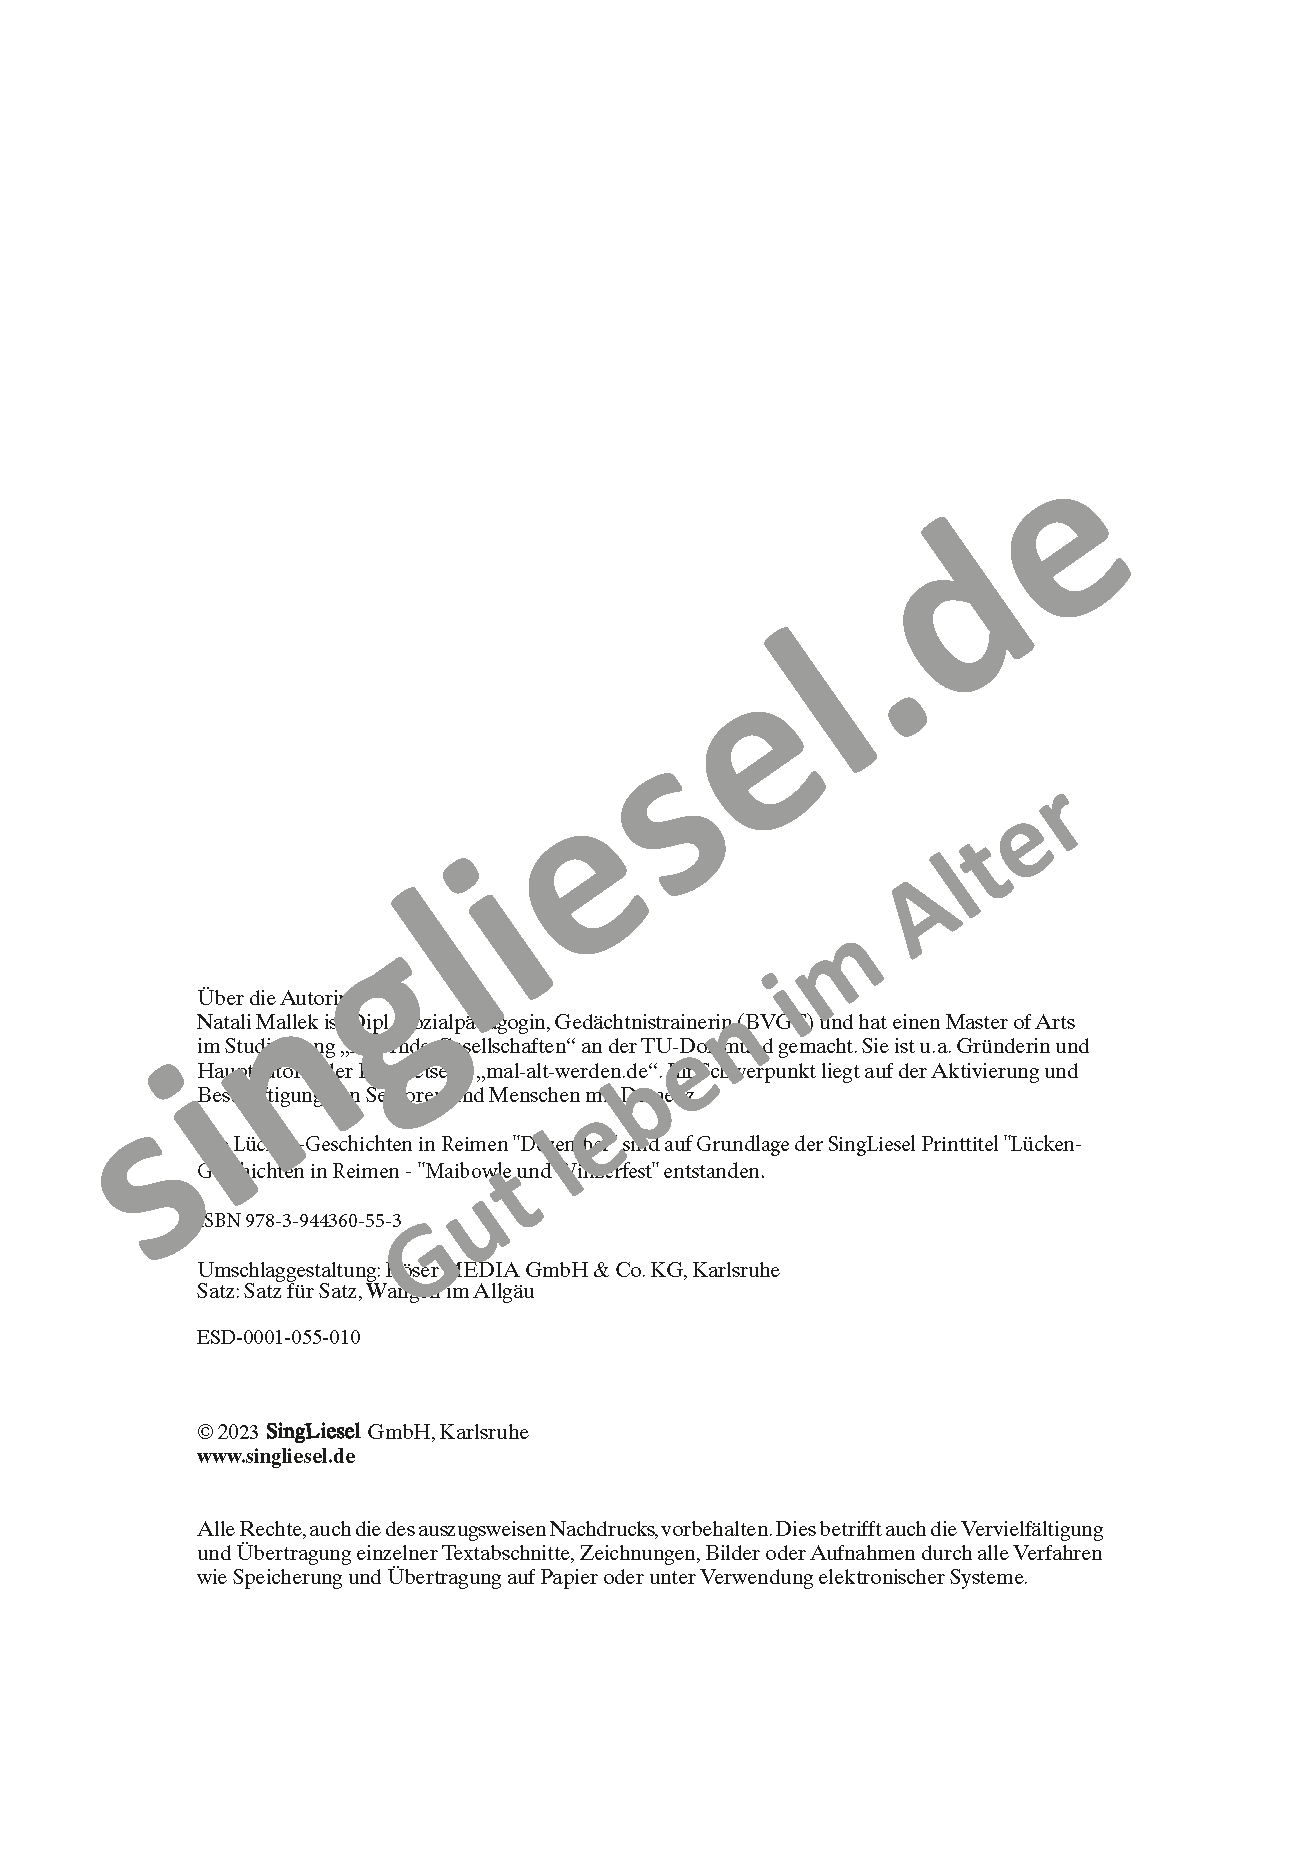 Dezember - Lücken-Geschichten in Reimen. Sofort PDF Download. Singliesel Verlag